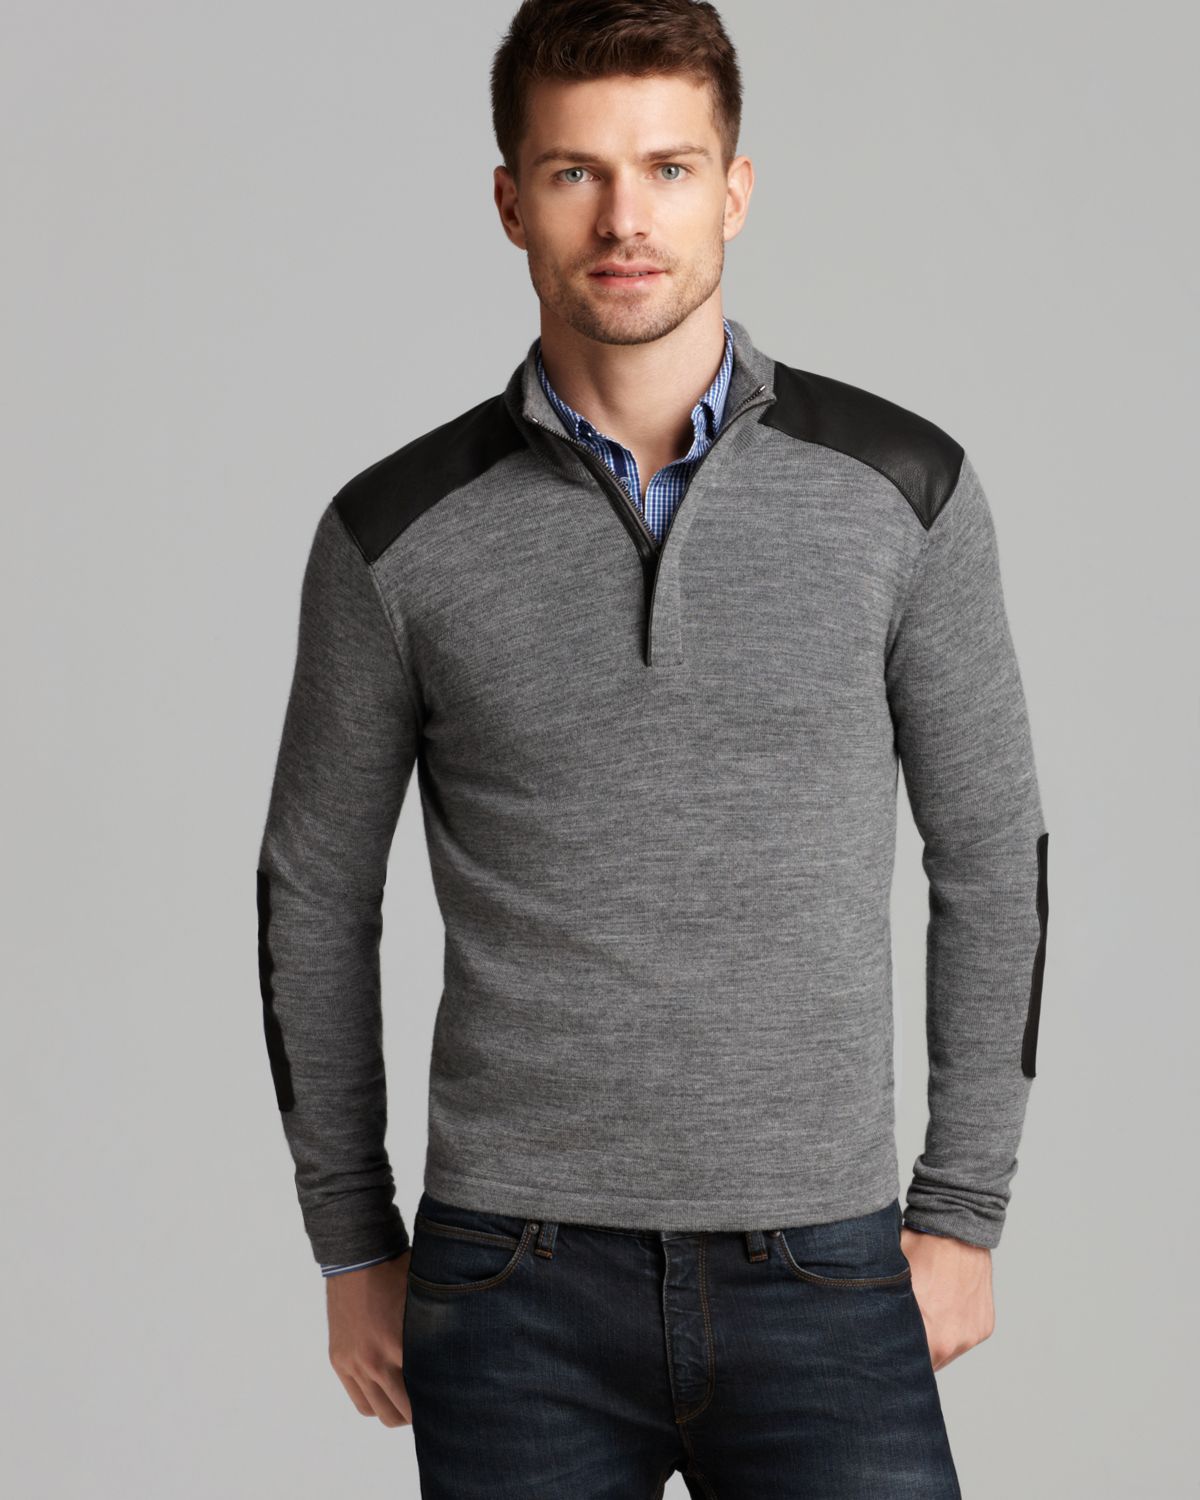 Lyst - Michael Kors Leather Trim Half Zip Sweater in Gray for Men